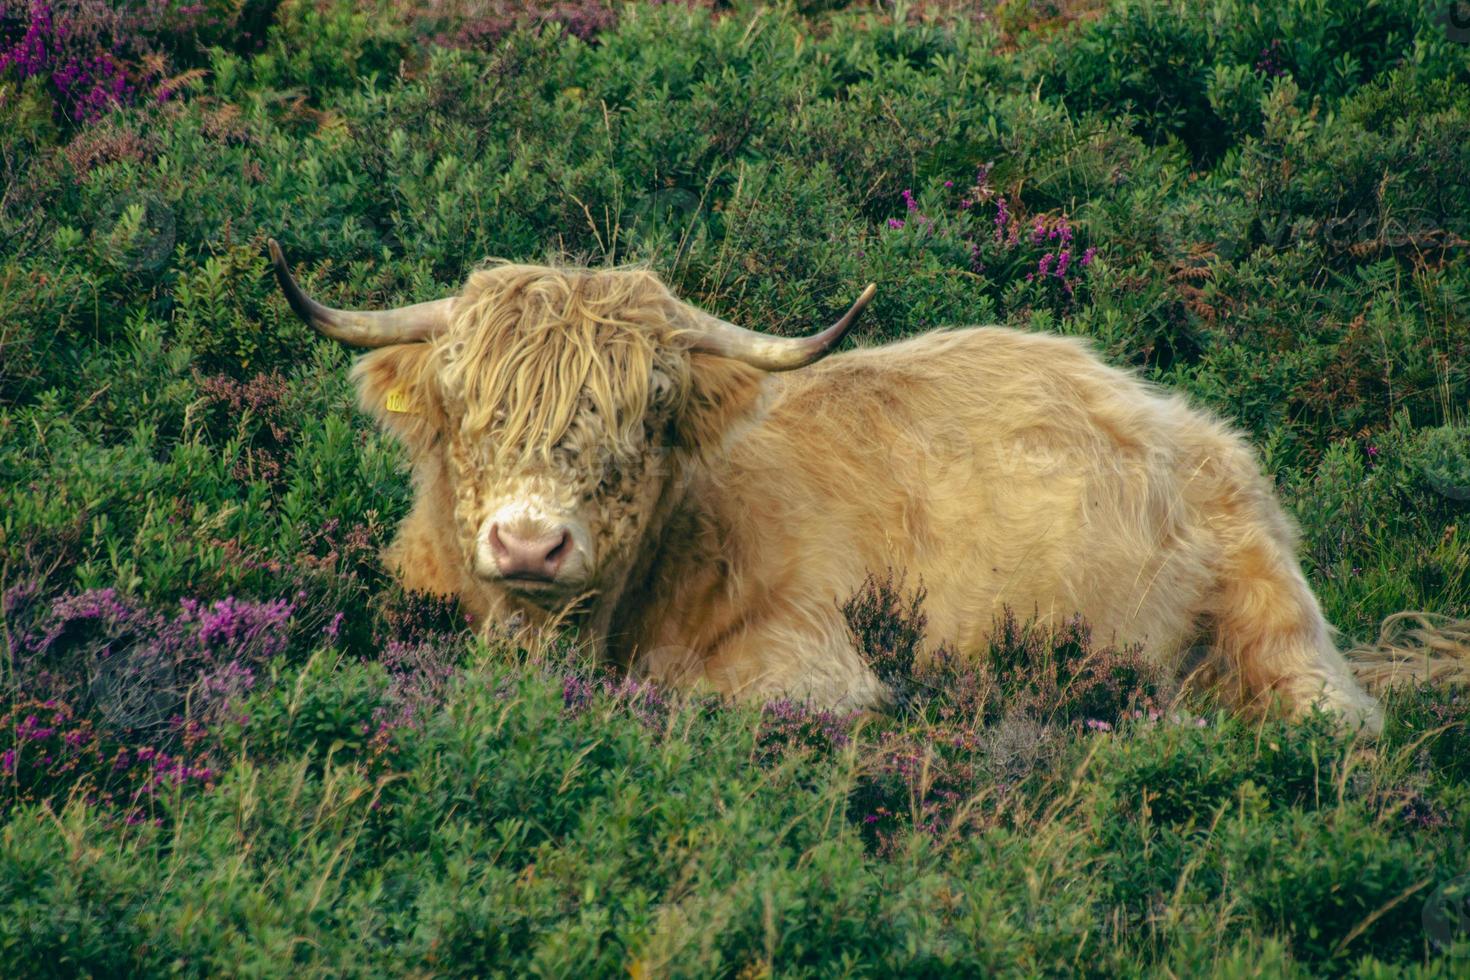 gado das terras altas nas terras altas escocesas foto